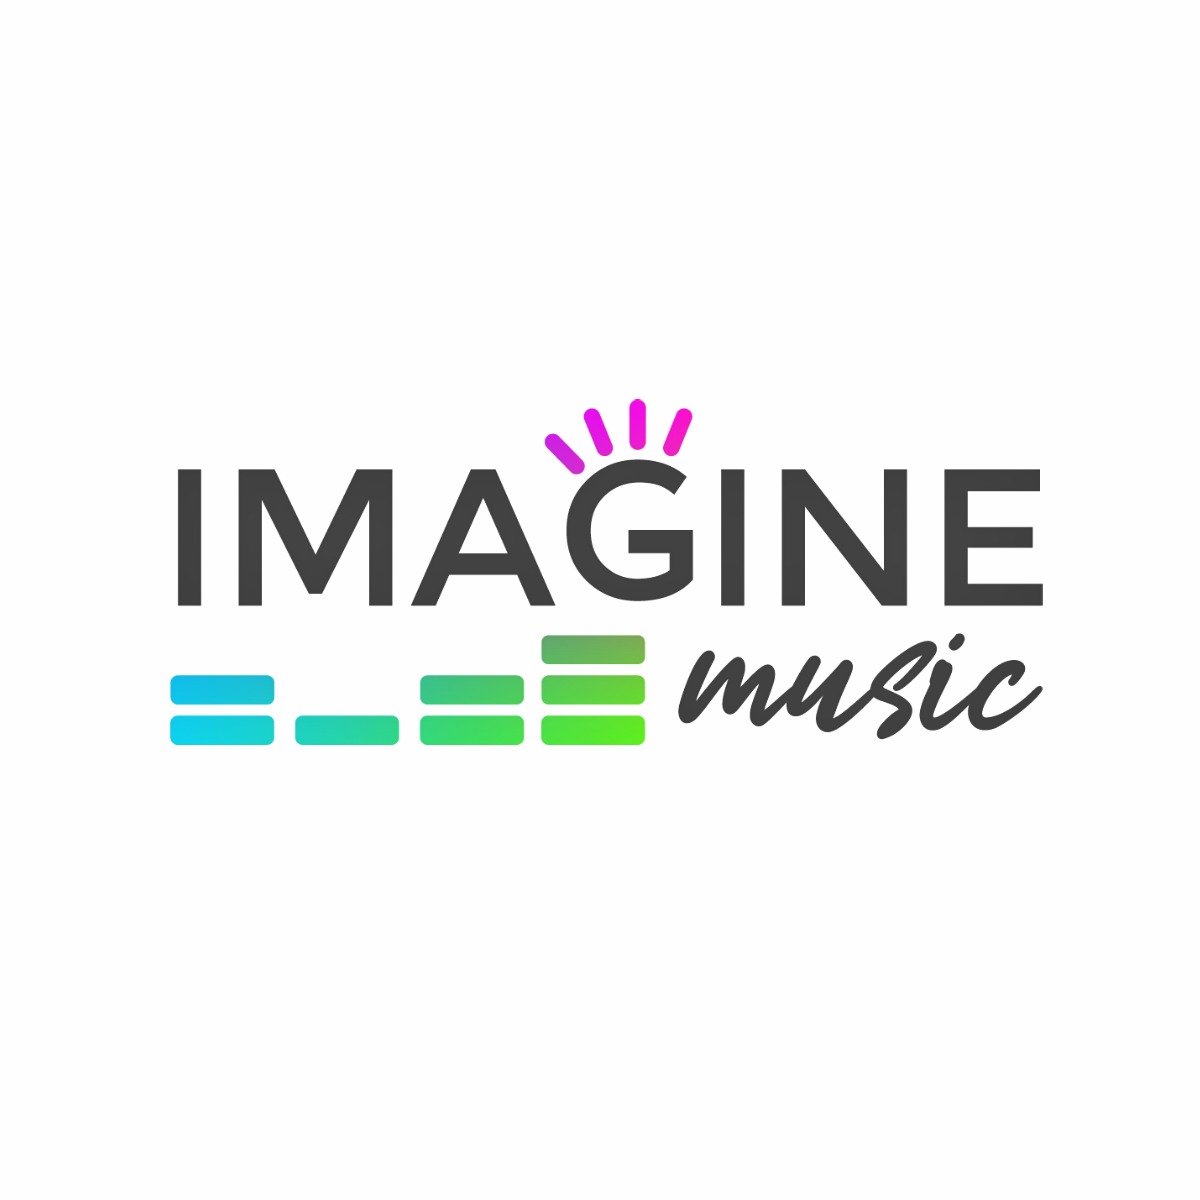 IMAGINE MUSIC MÉXICO